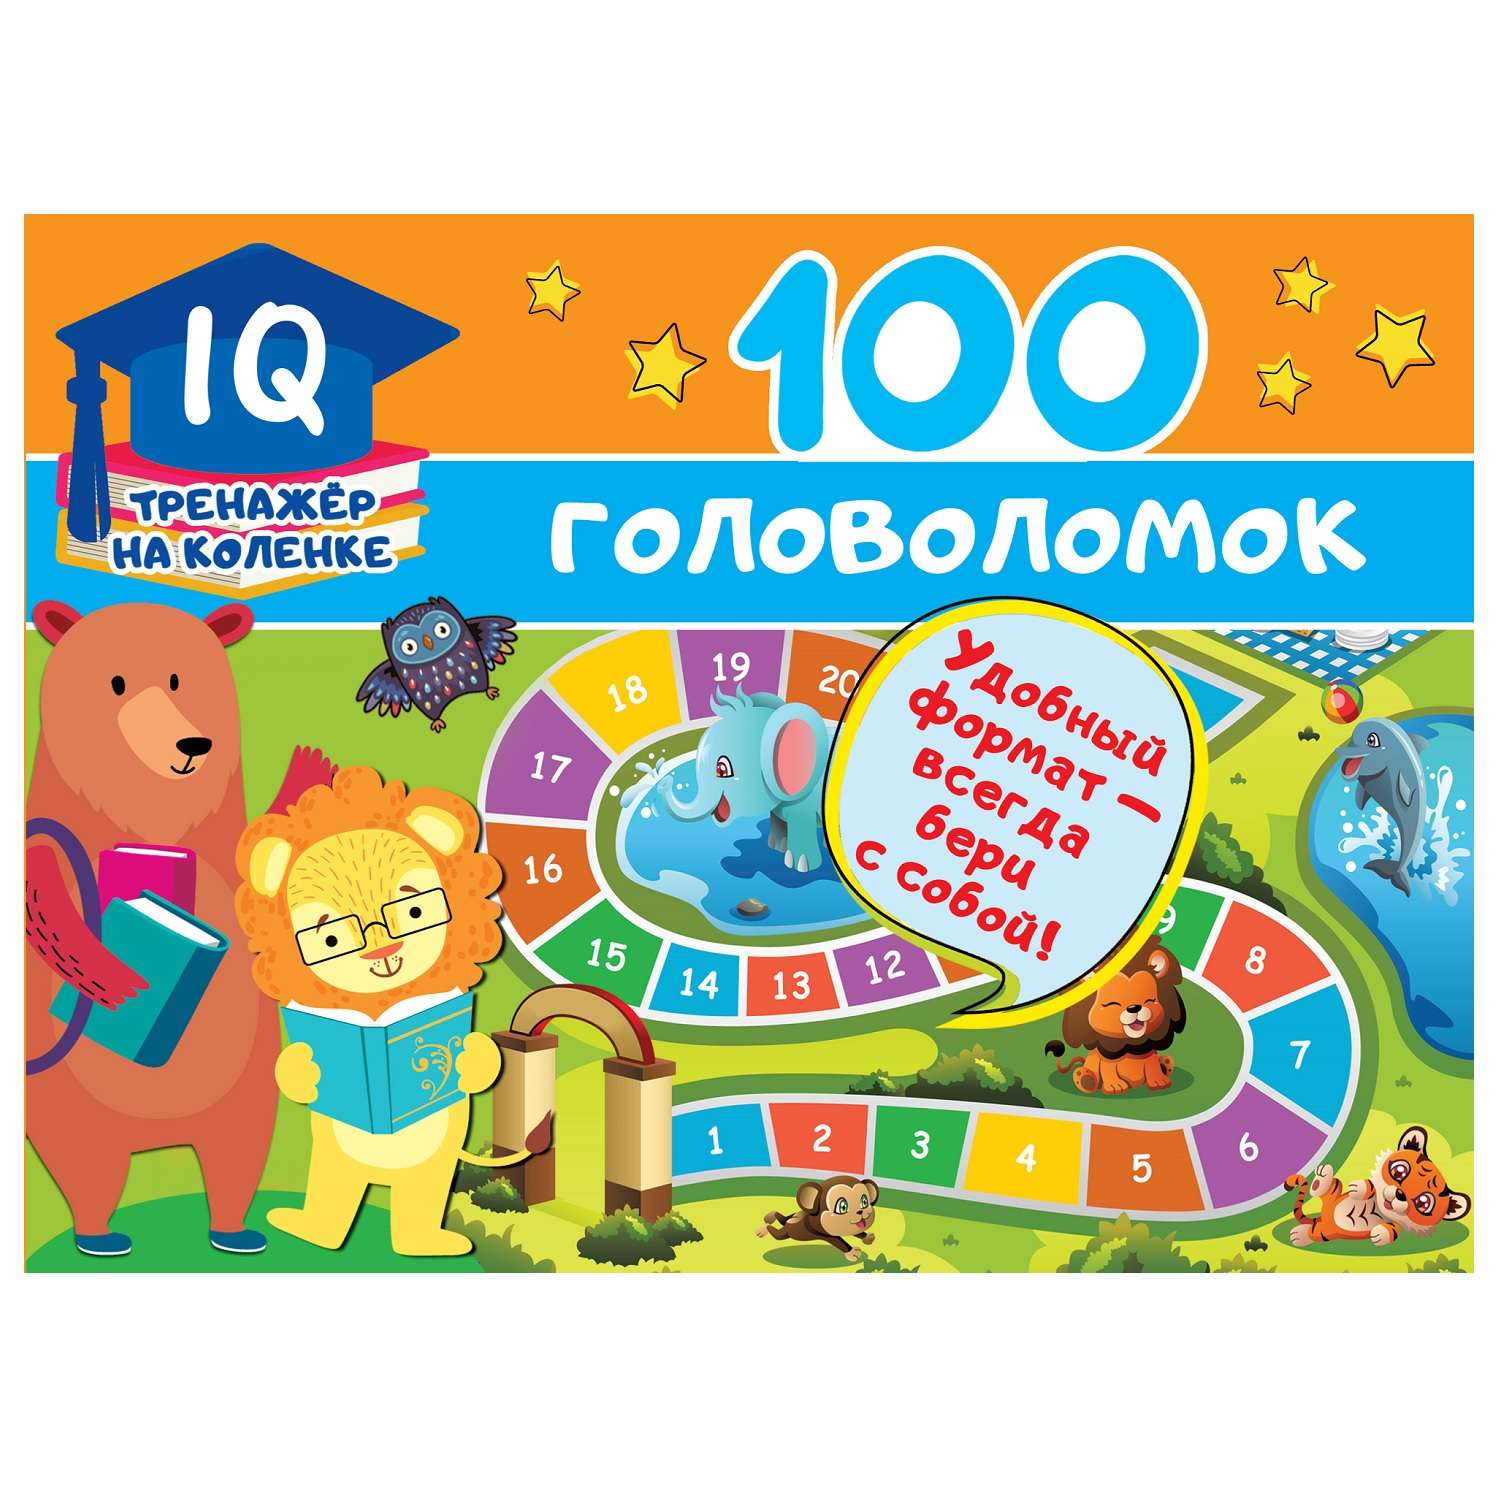 Книга АСТ IQтренажер на коленке 100 головоломок - фото 1